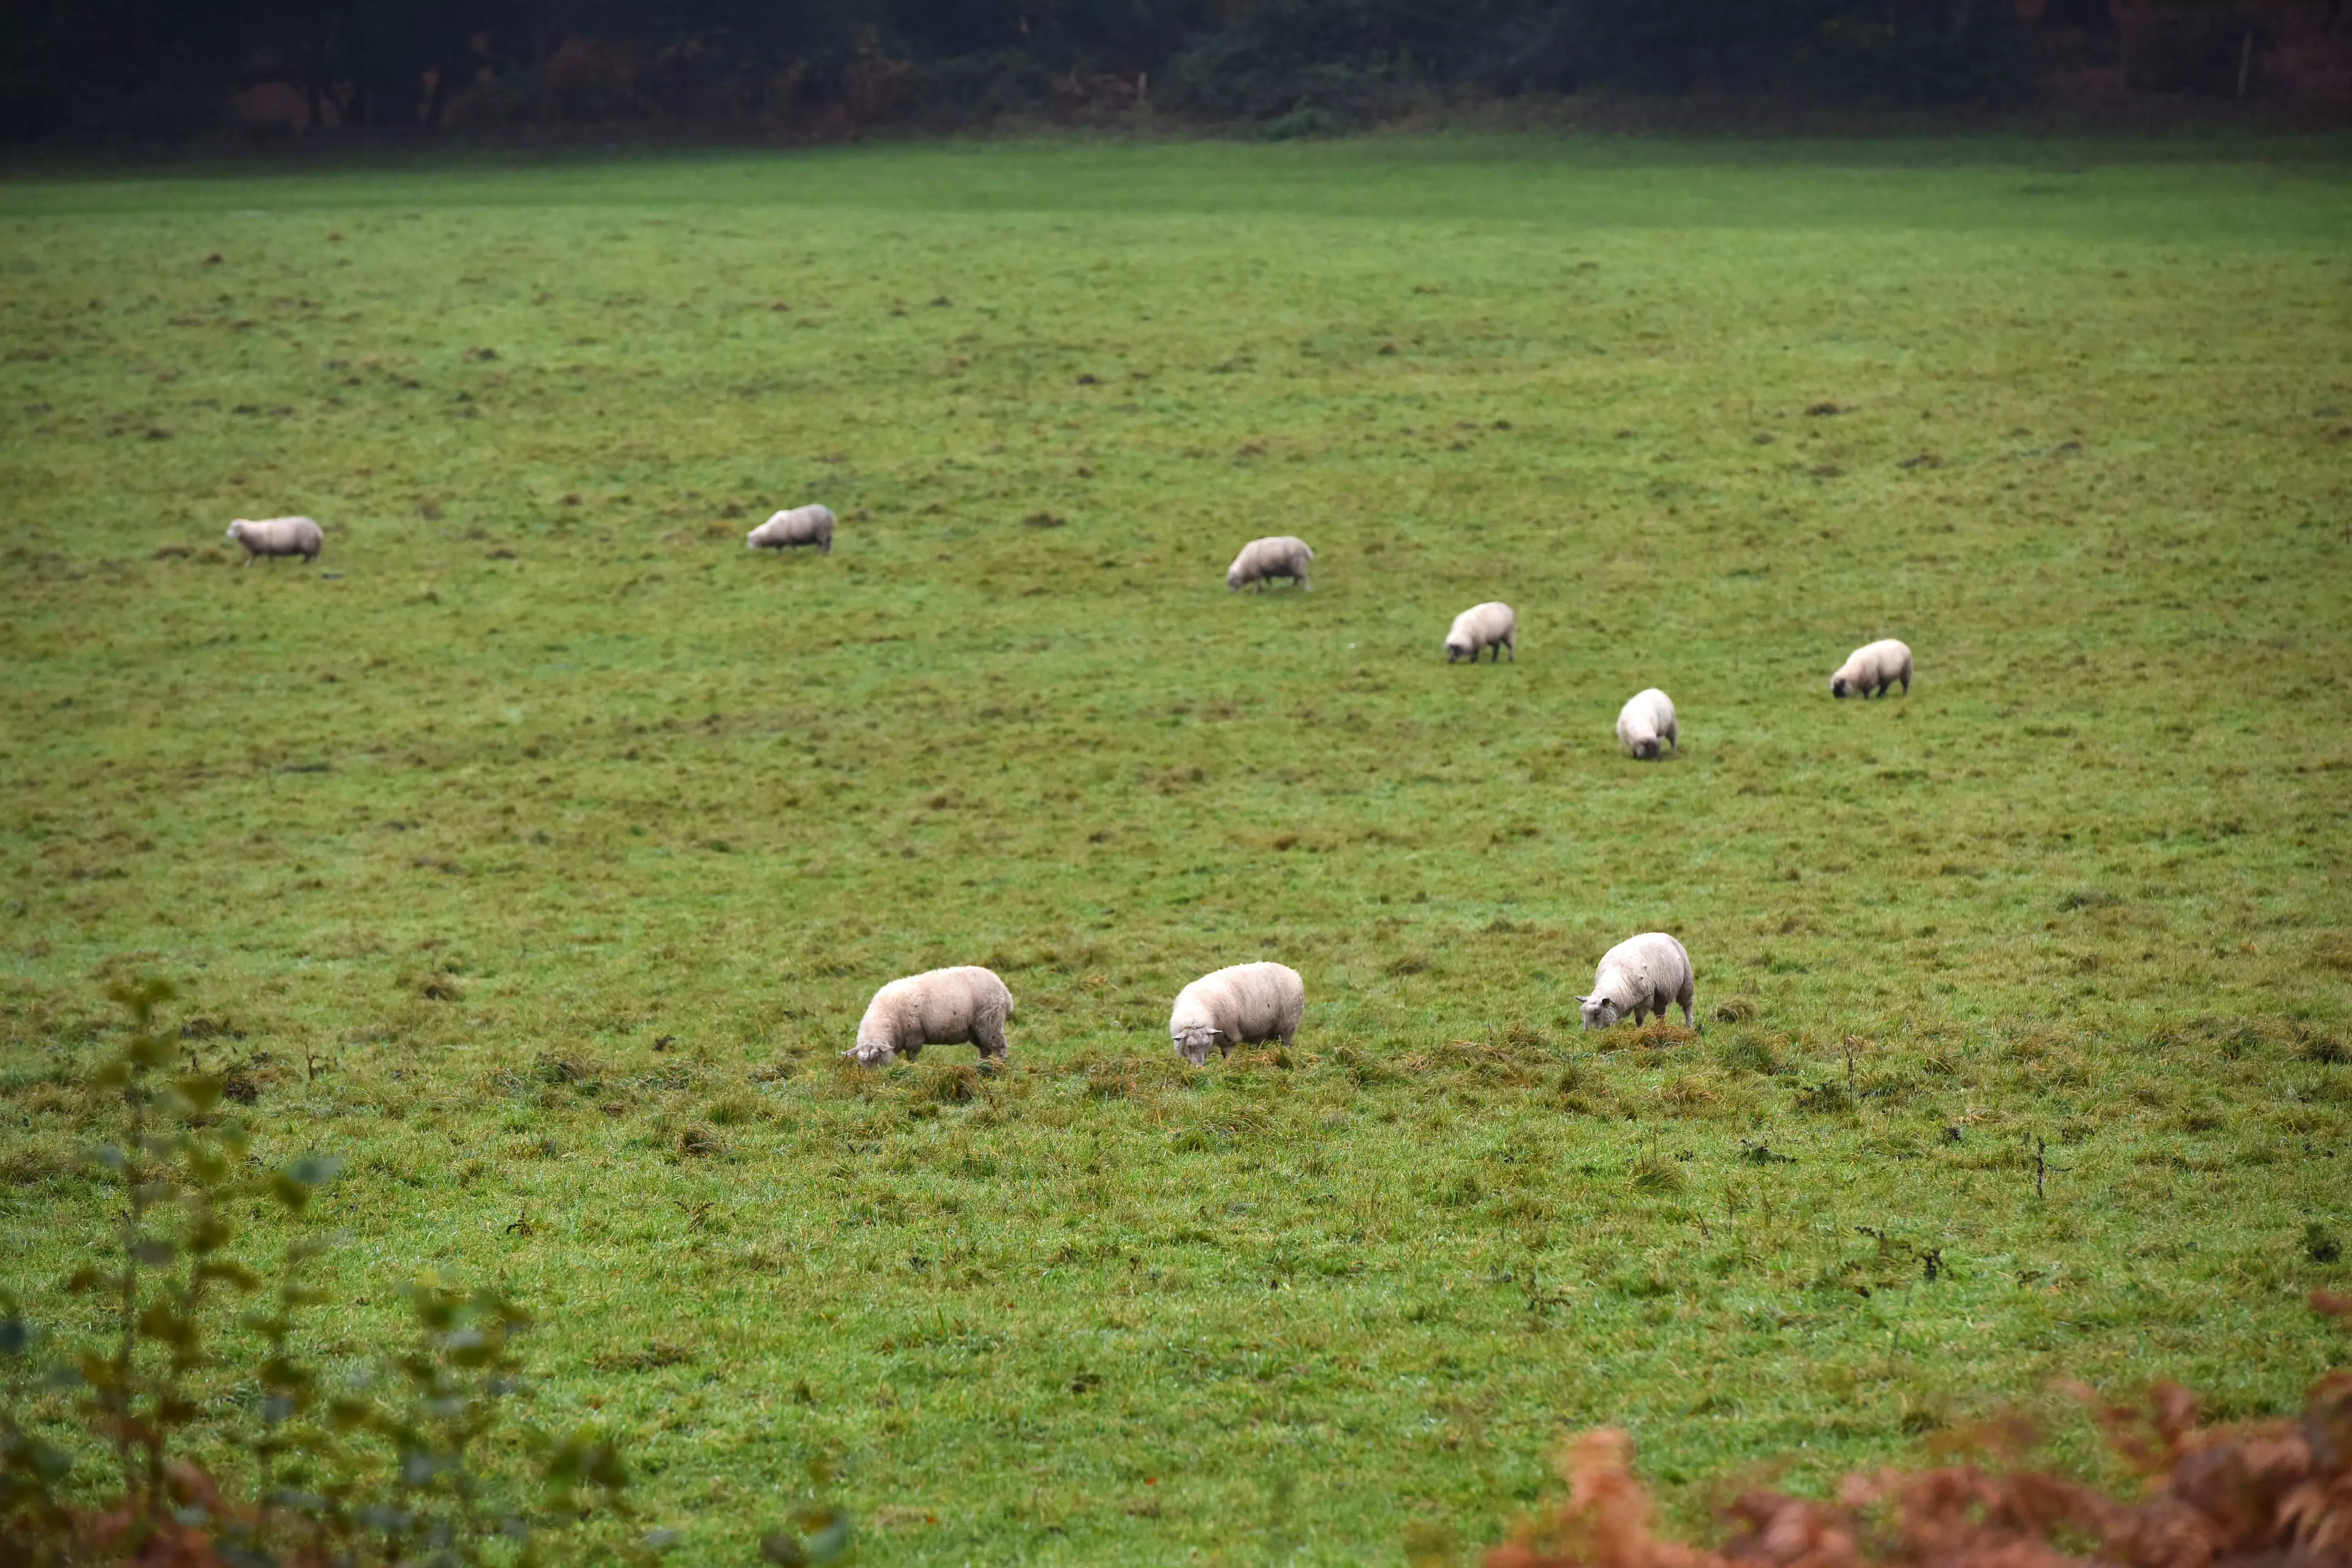 The sheep were found in fields.